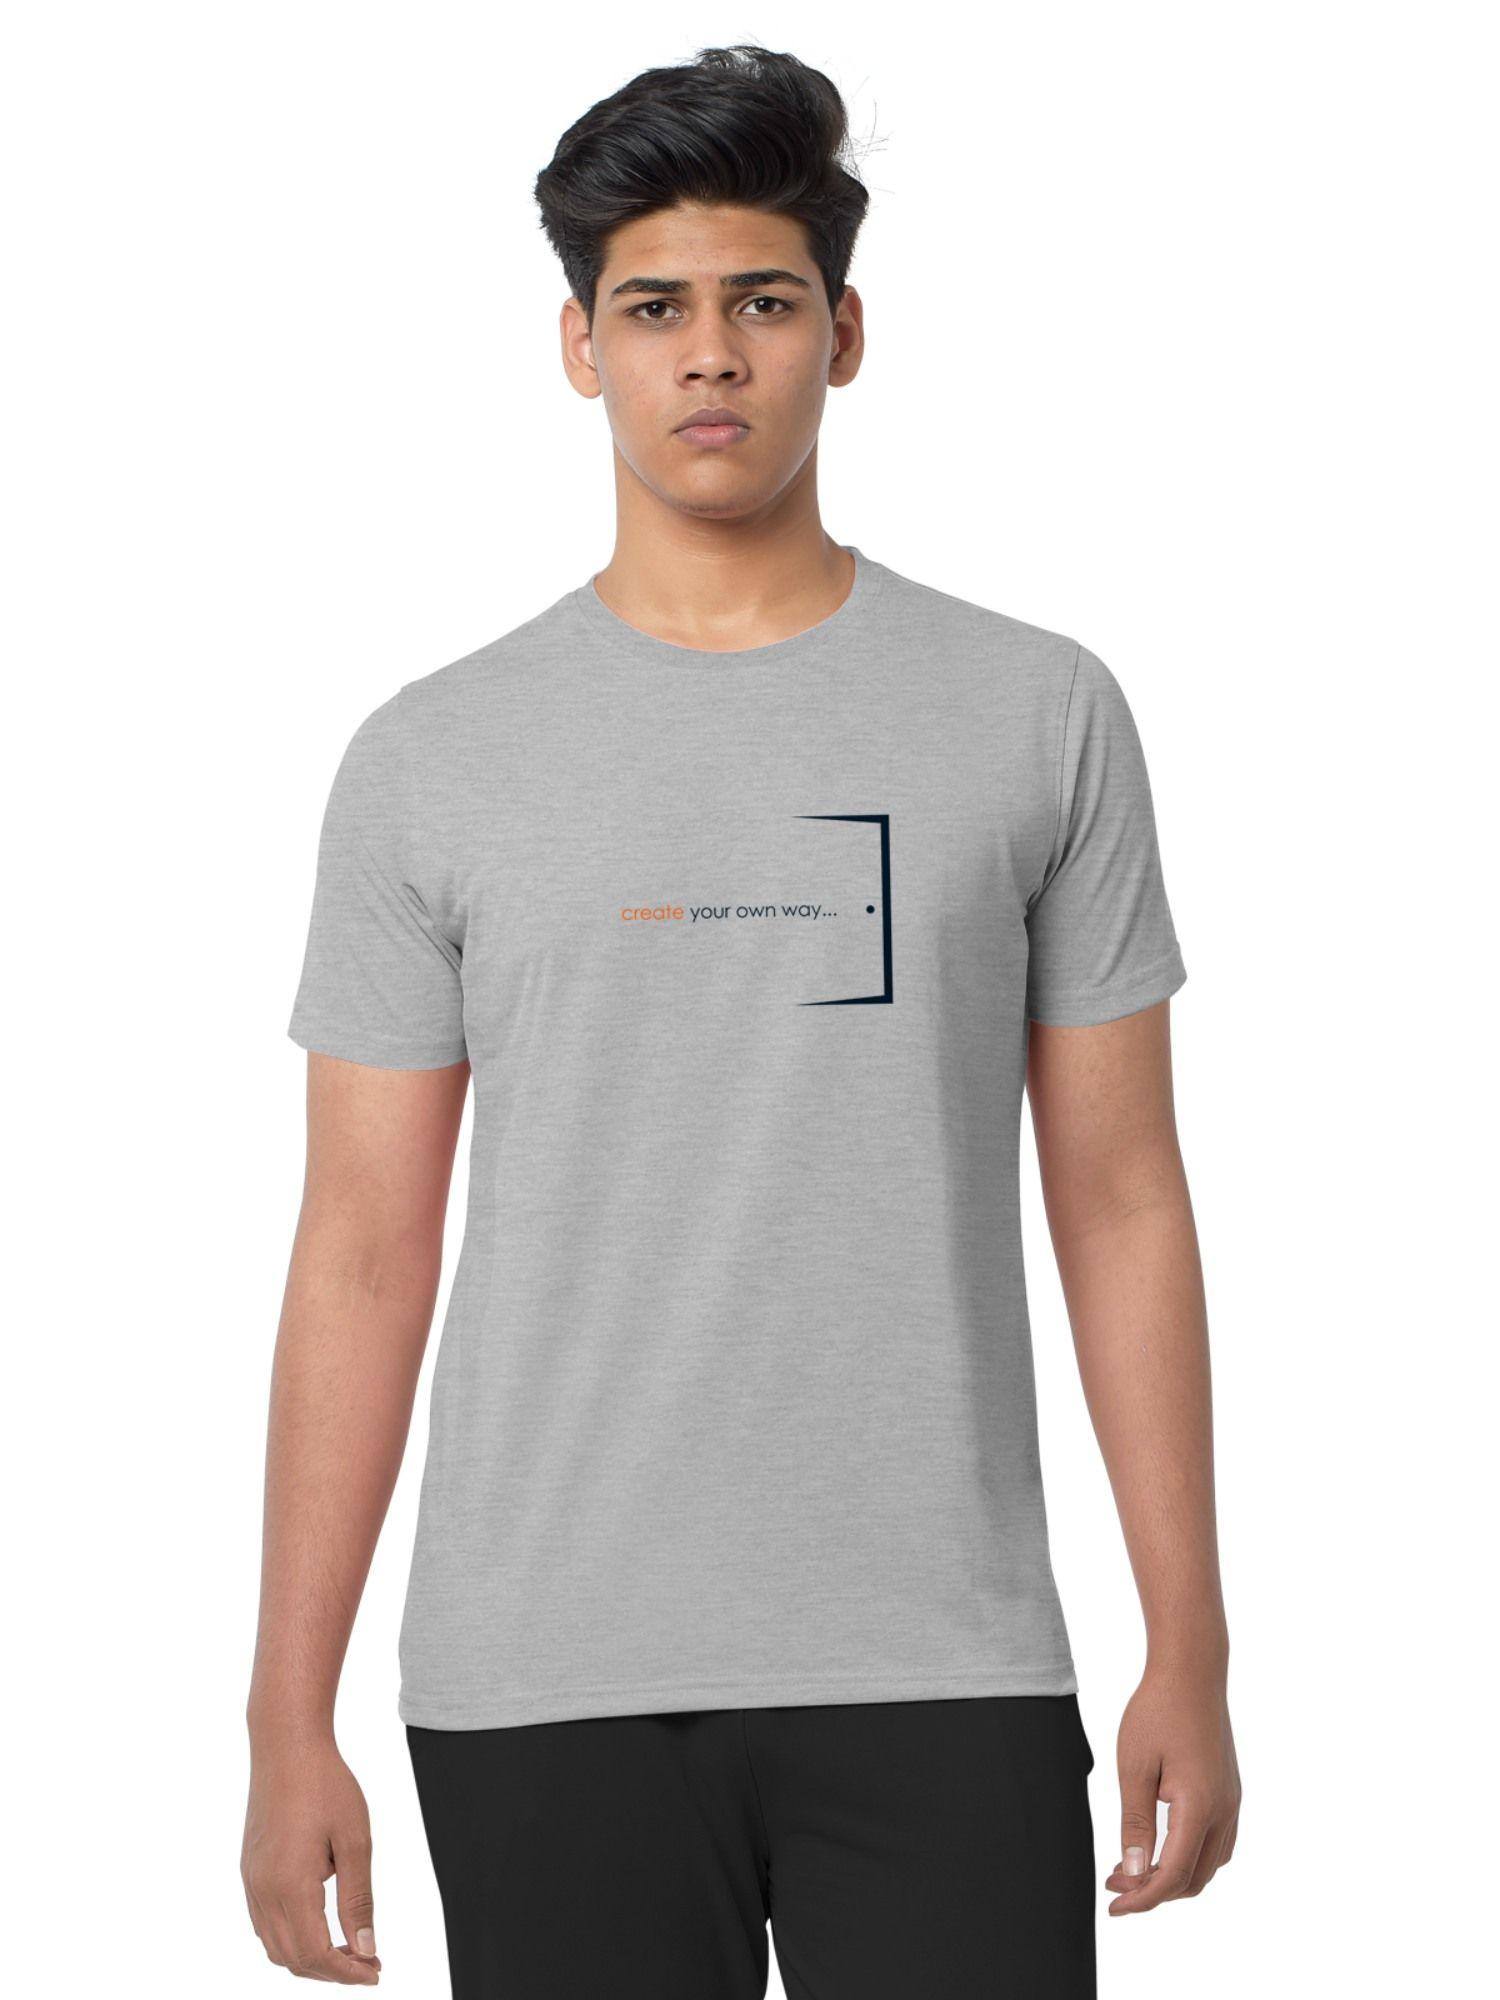 grey melange trendy printed typographic cotton blend round neck half sleeve t-shirt